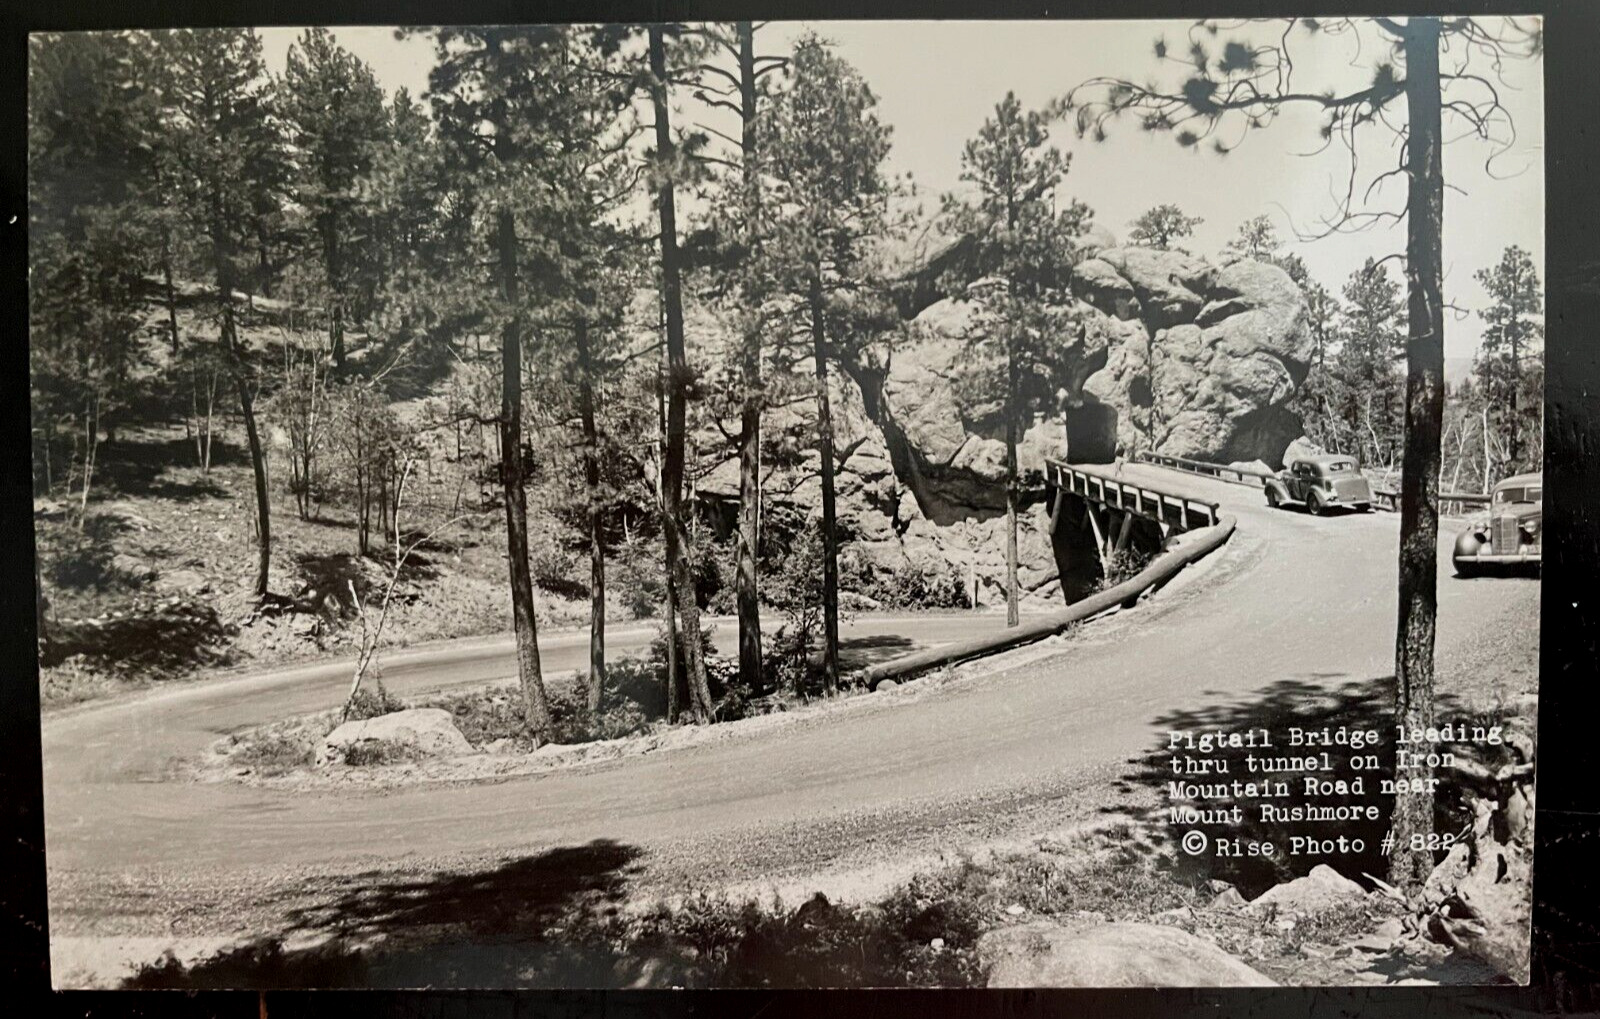 Vintage Postcard 1930-45 Pigtail Bridge, Iron Mountain Rd., Mt. Rushmore, SD